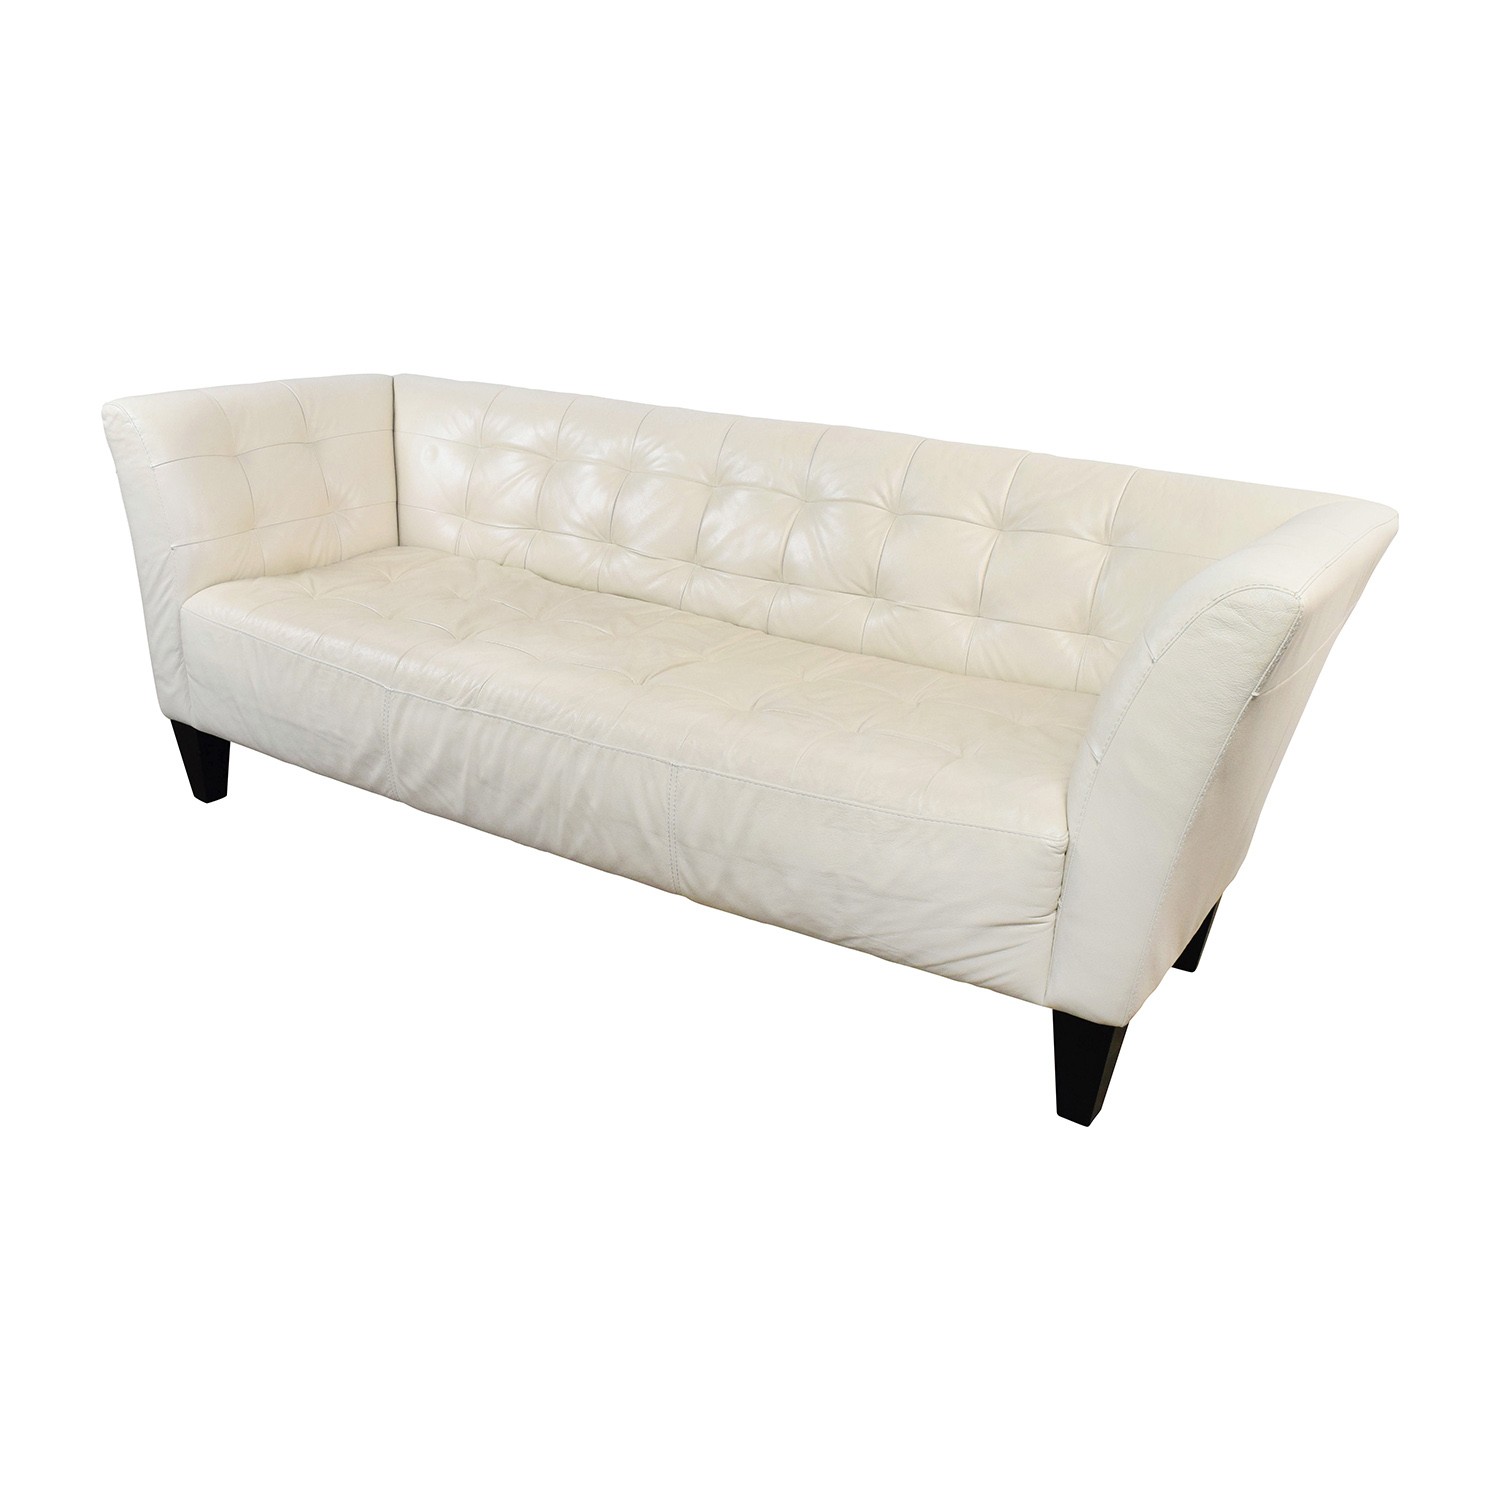 86 off macys macys modern white leather tufted sofa